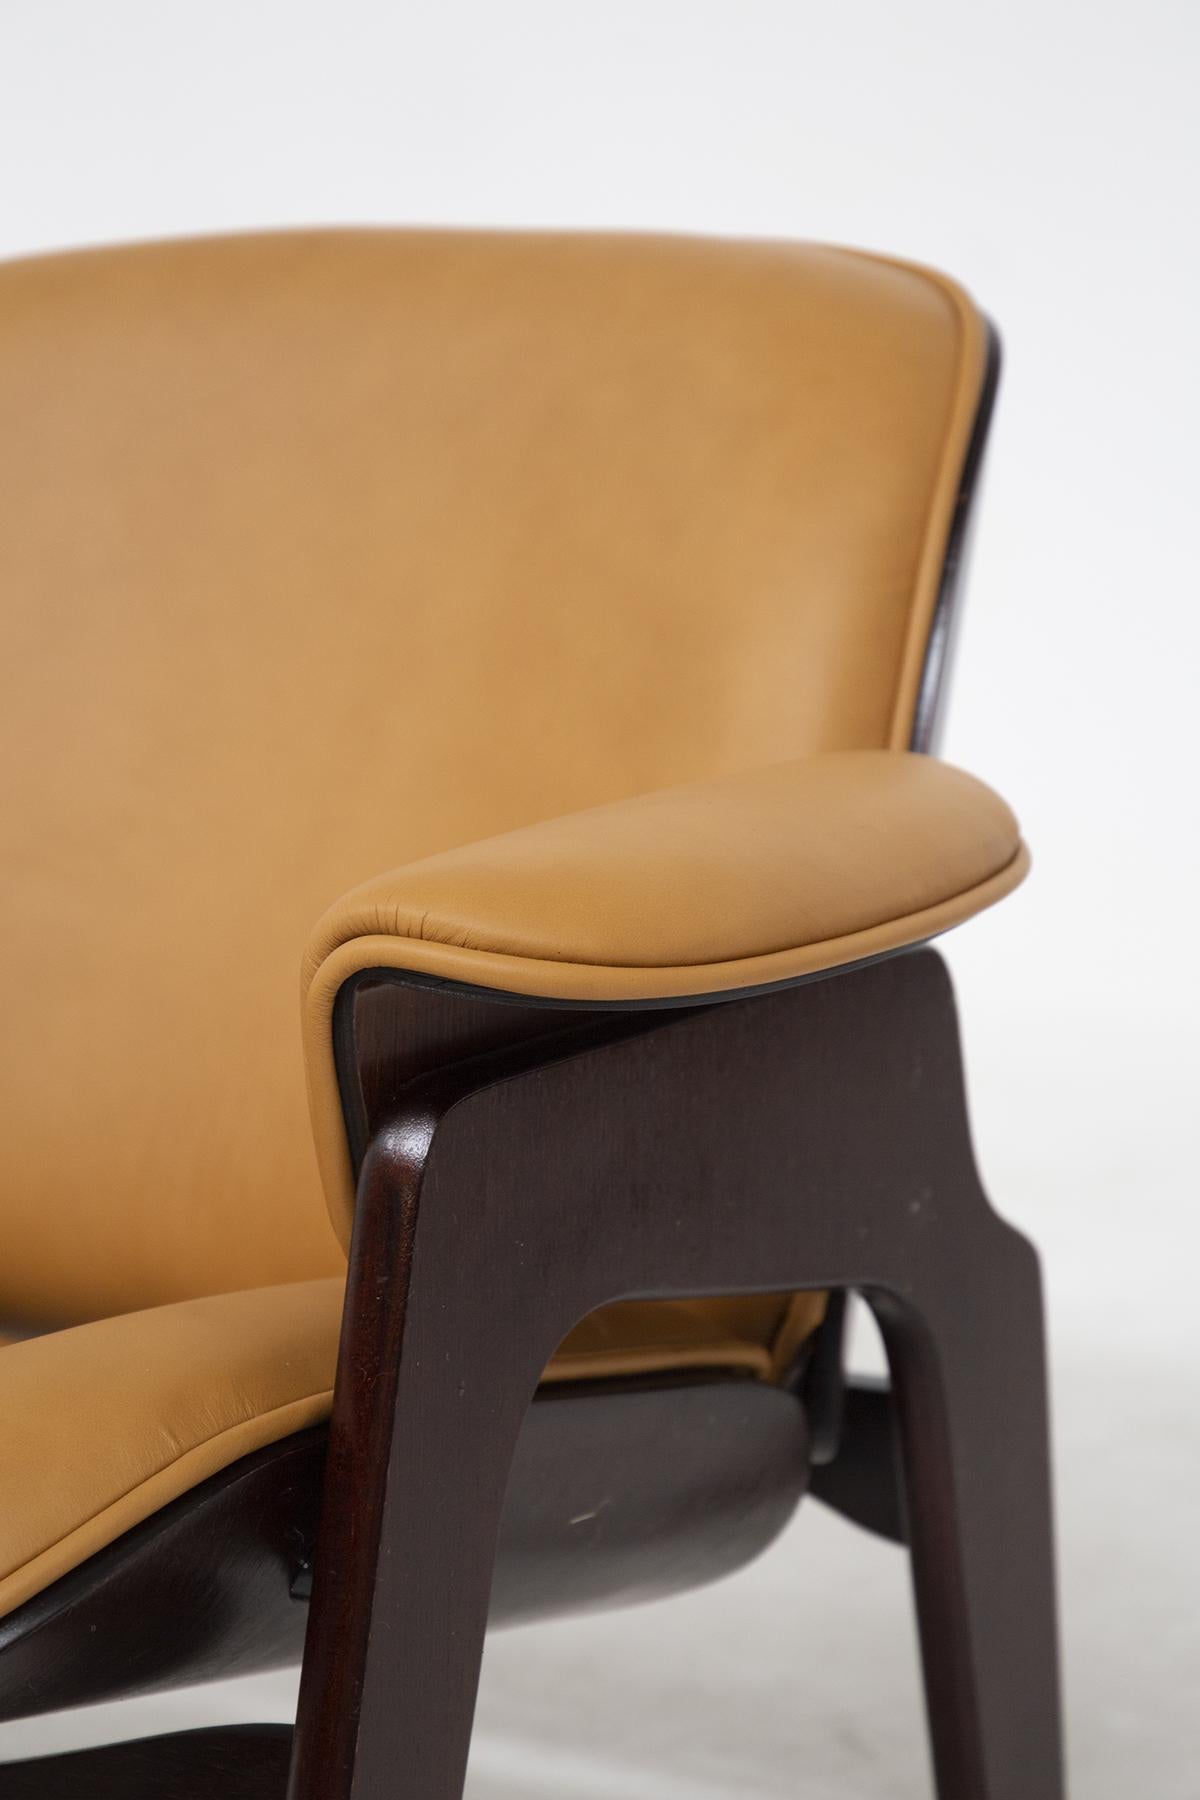 Ico Parisi Faux Leather Armchairs for MIM, Original Label 1